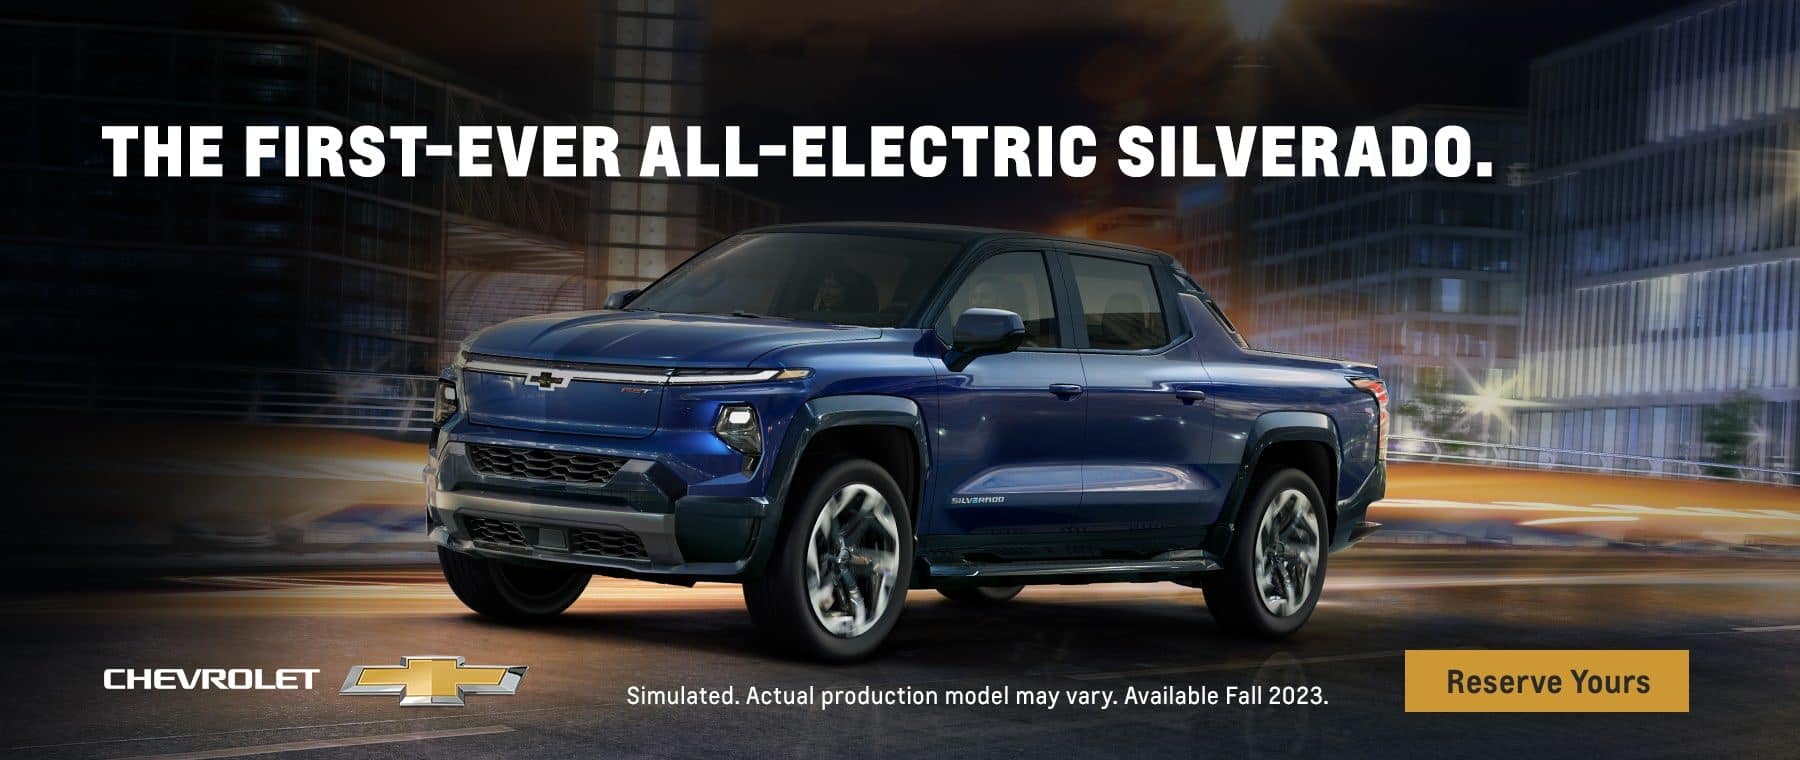 The first-ever-all-electric Silverado